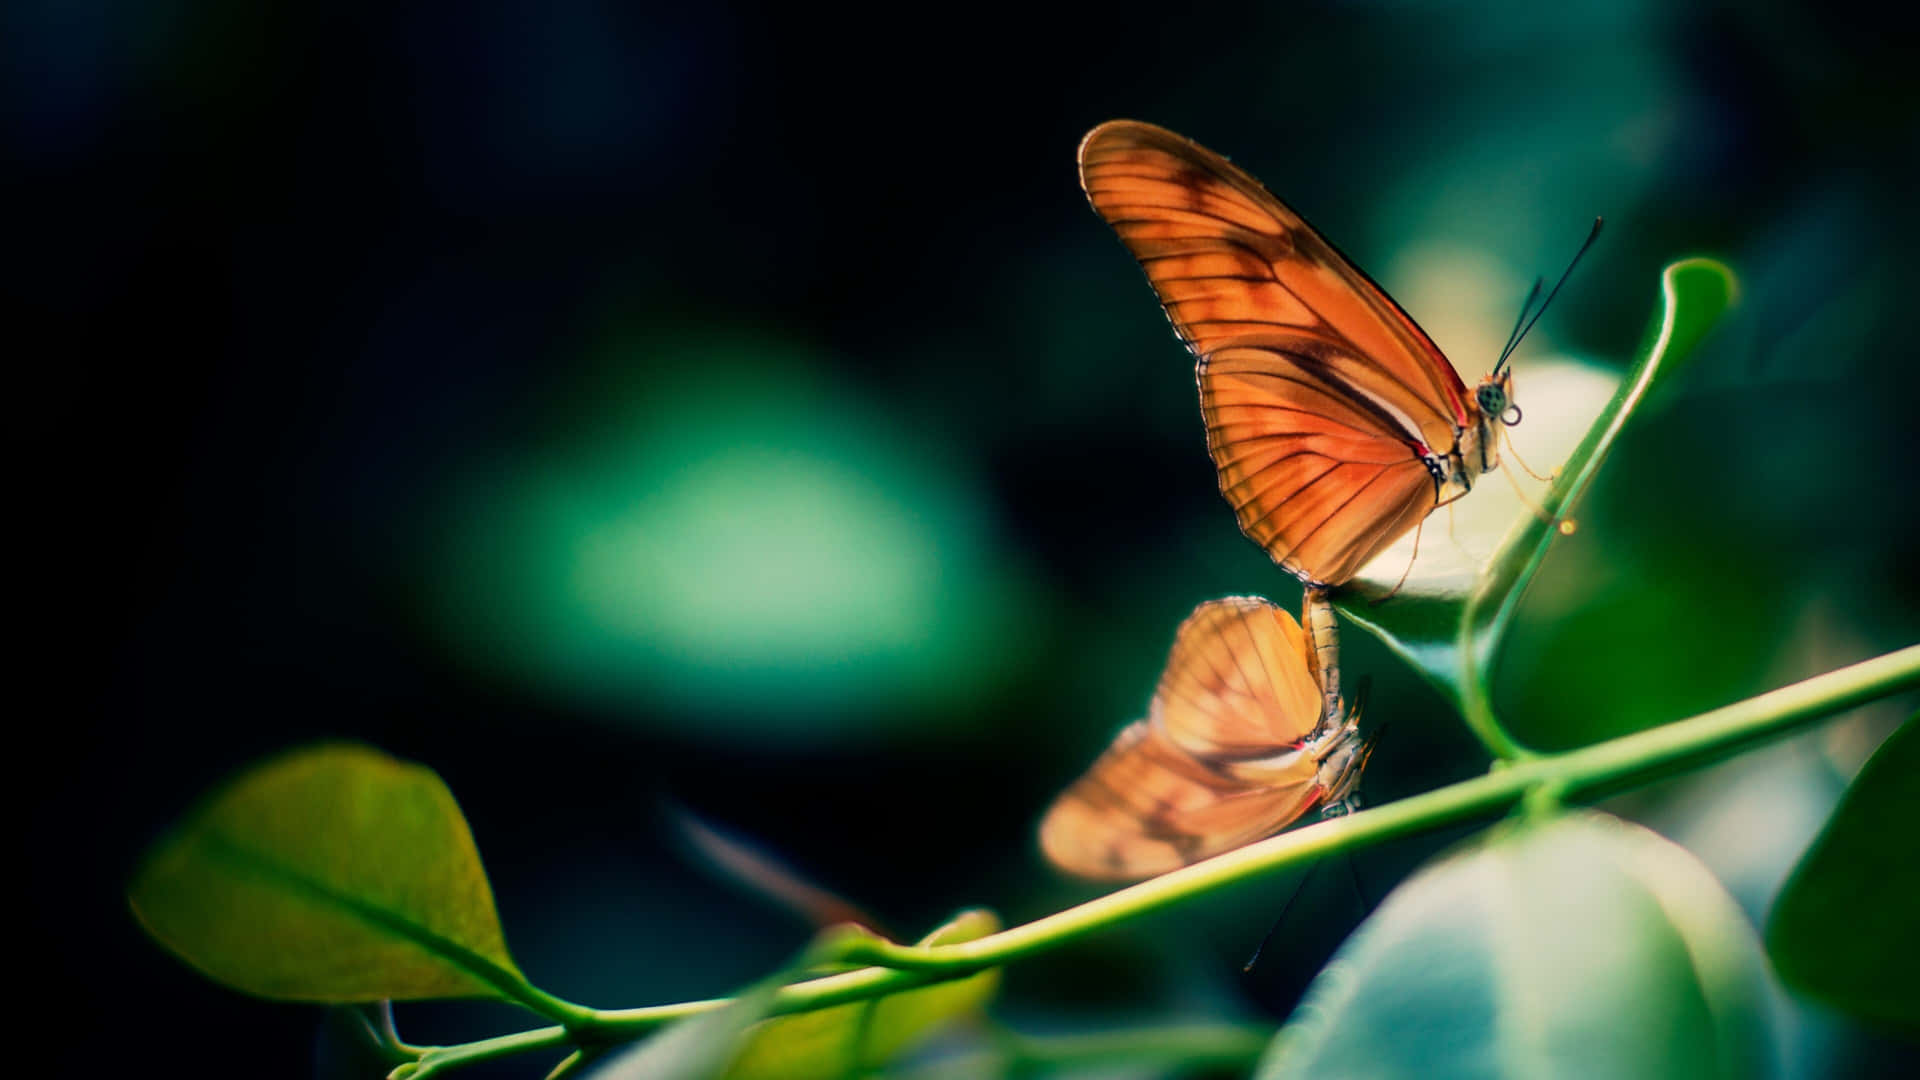 Stunning Vibrant 4k Butterfly Image Wallpaper